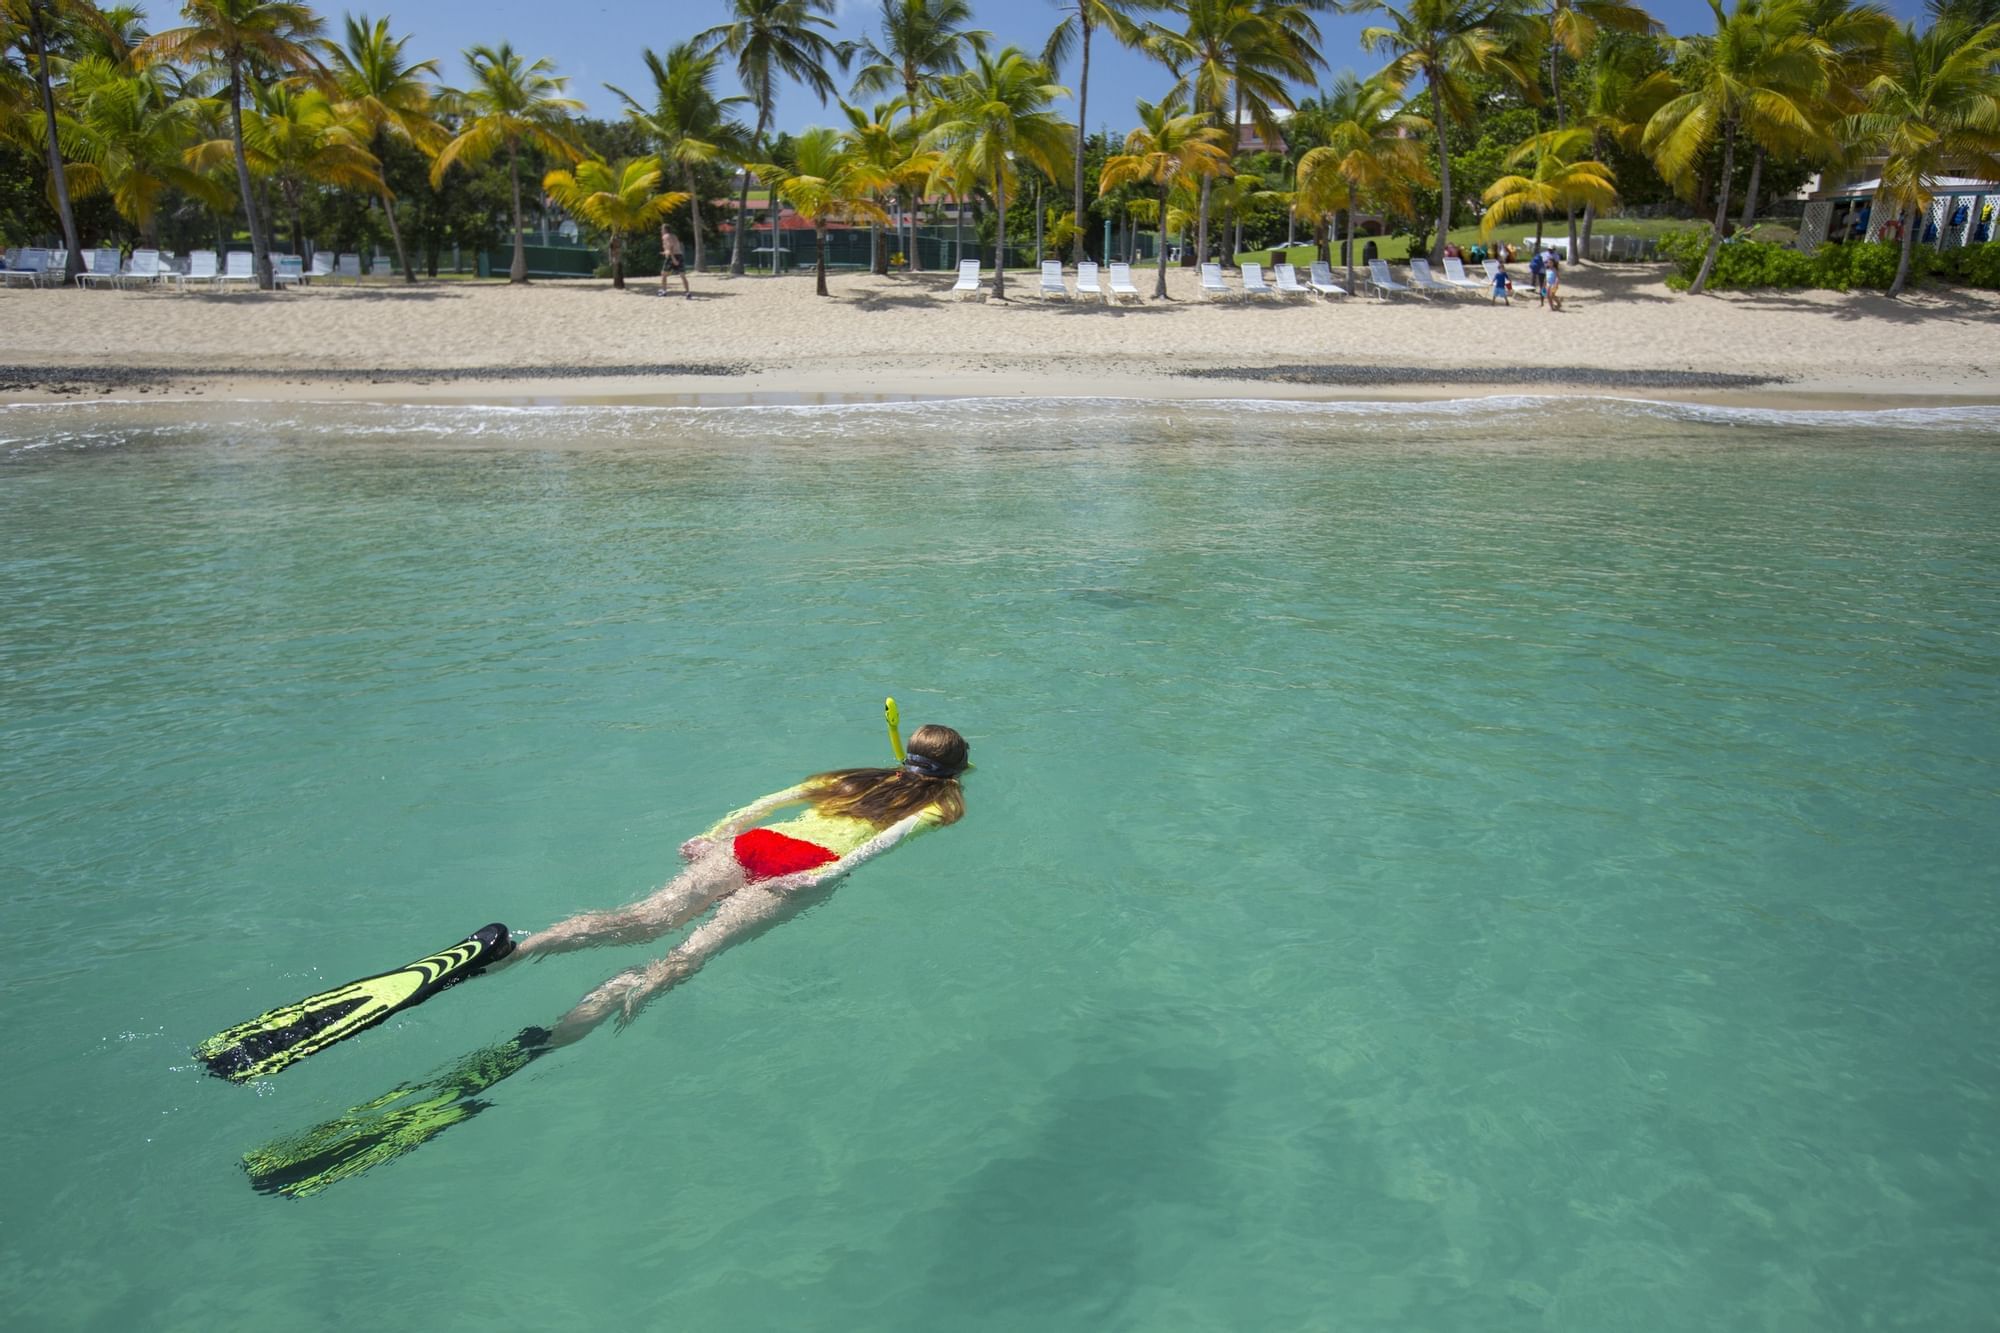 A woman snorkeling in the ocean near The Buccaneer Resort St. Croix